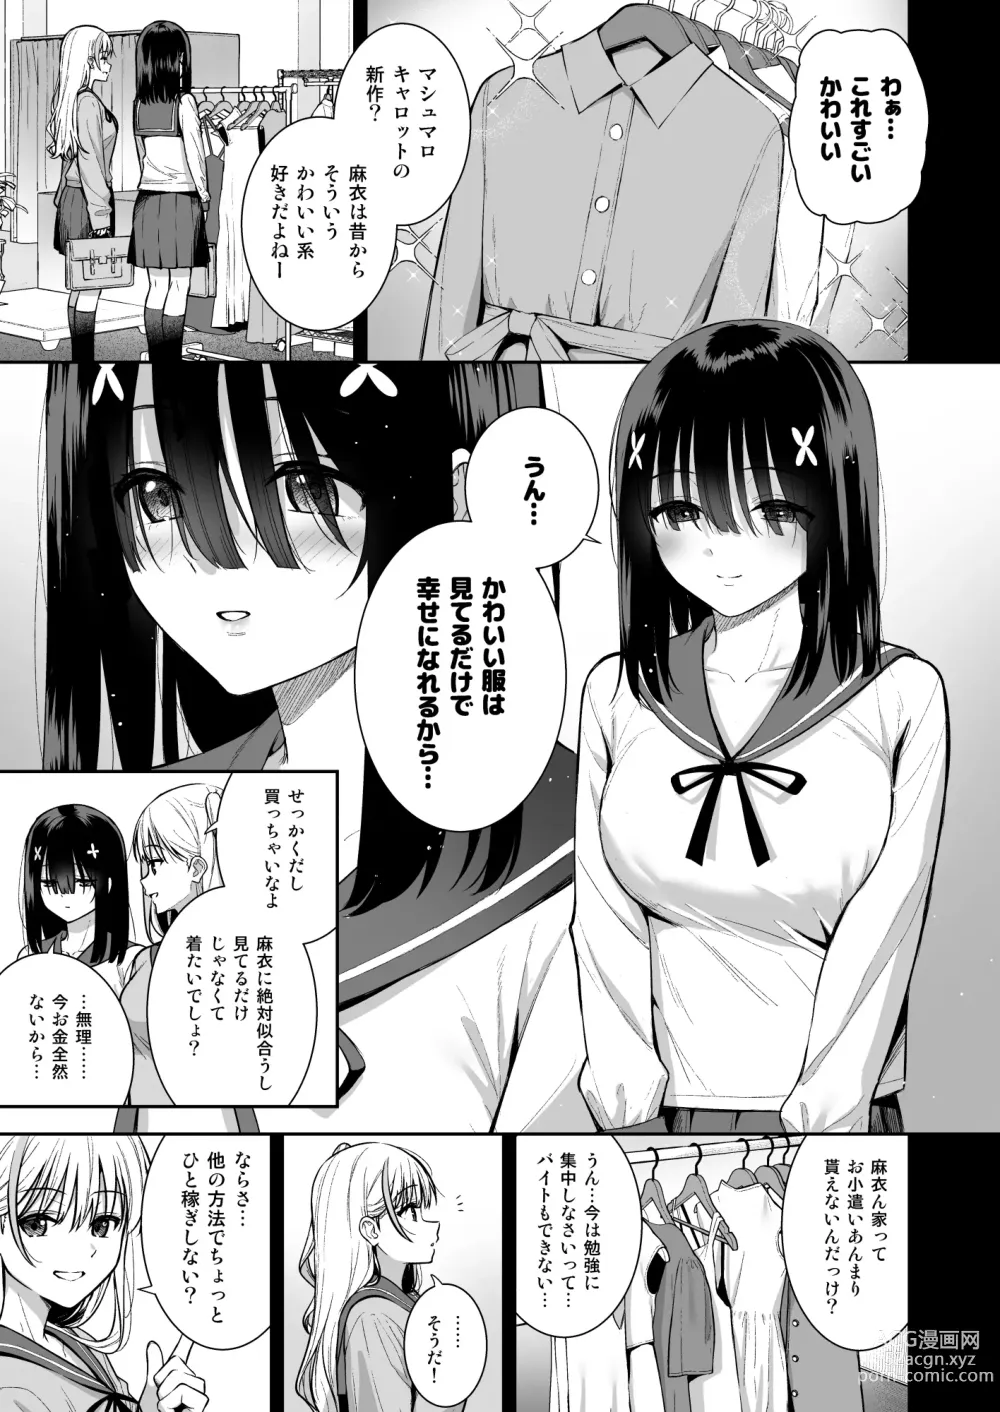 Page 4 of doujinshi Otonashii Onoki Mai wa Dawai shie Iku - Mai Onoki is Falling Down. Falling down.